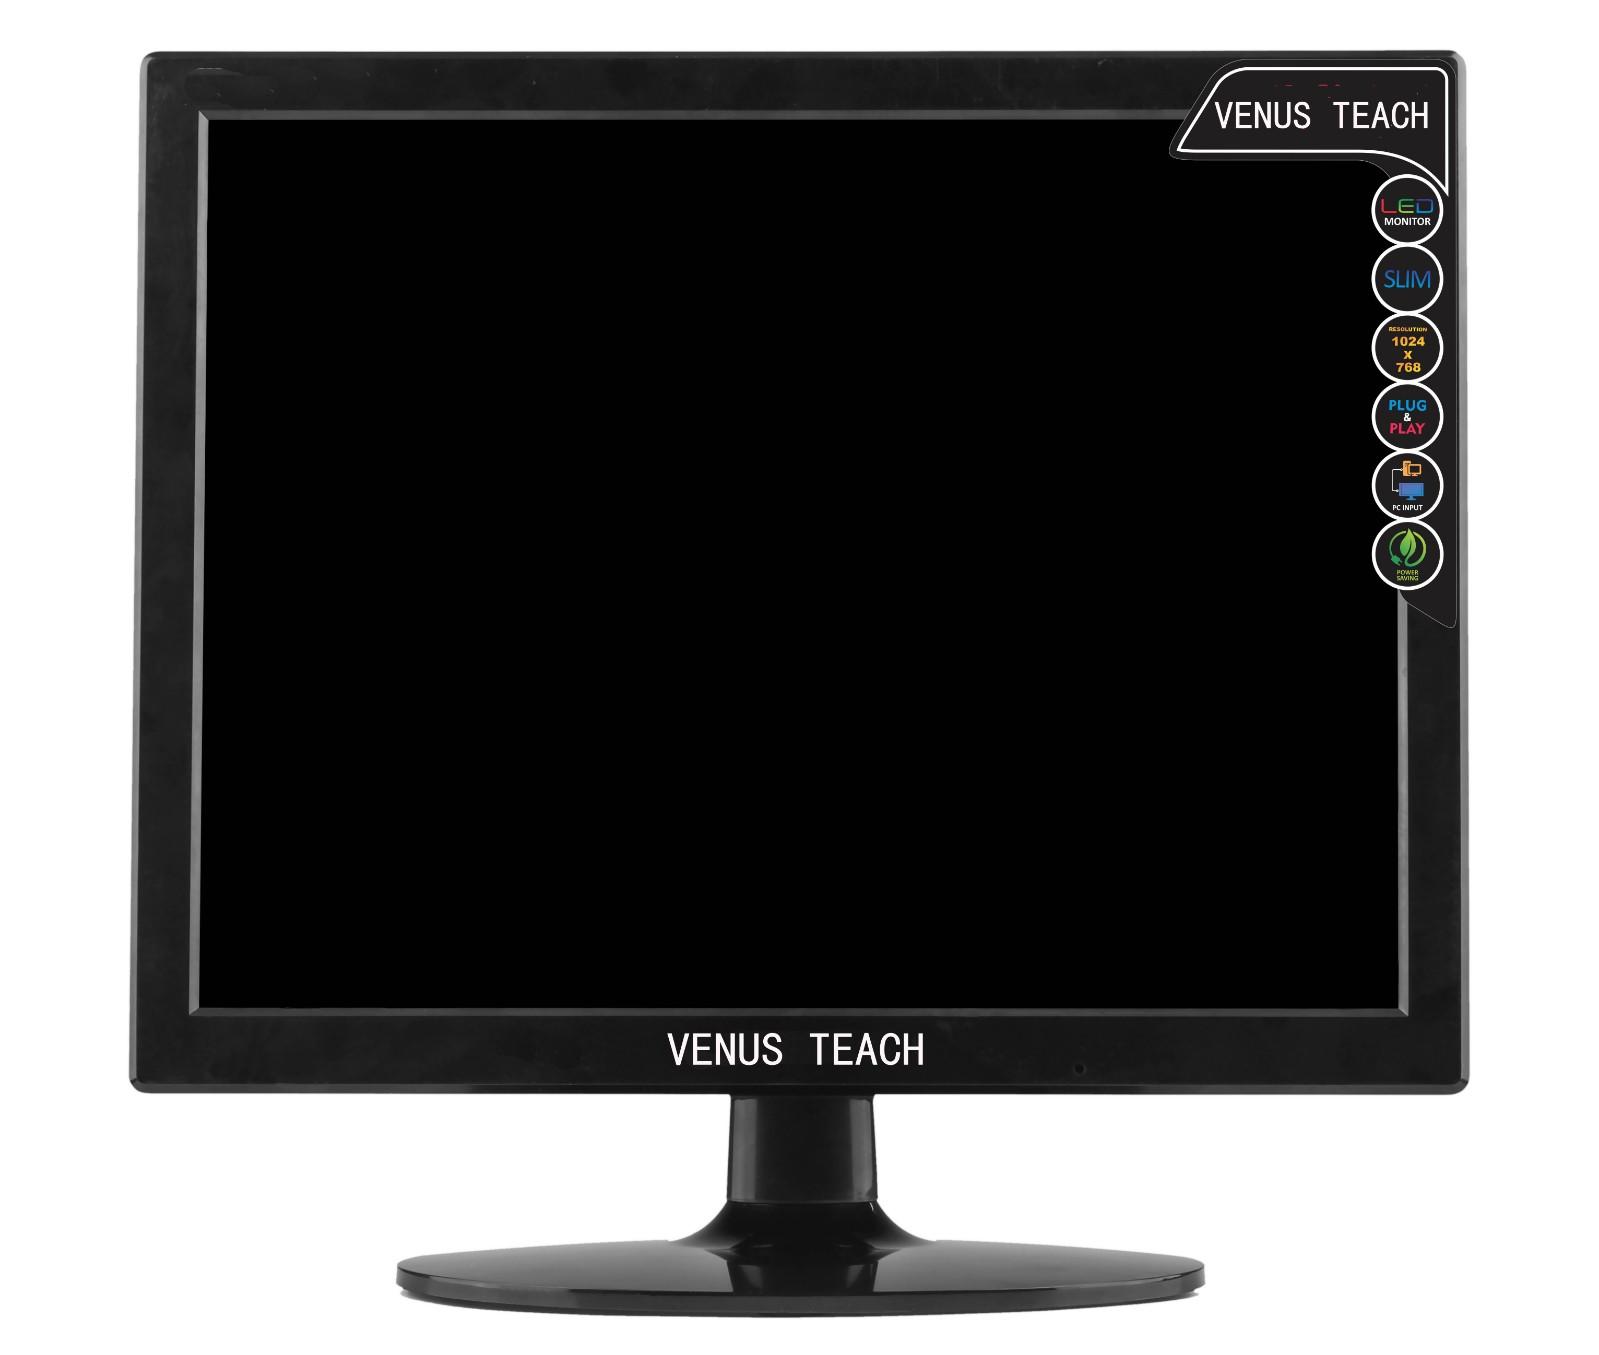 tft monitor second 15 inch lcd monitor Xinyao LCD